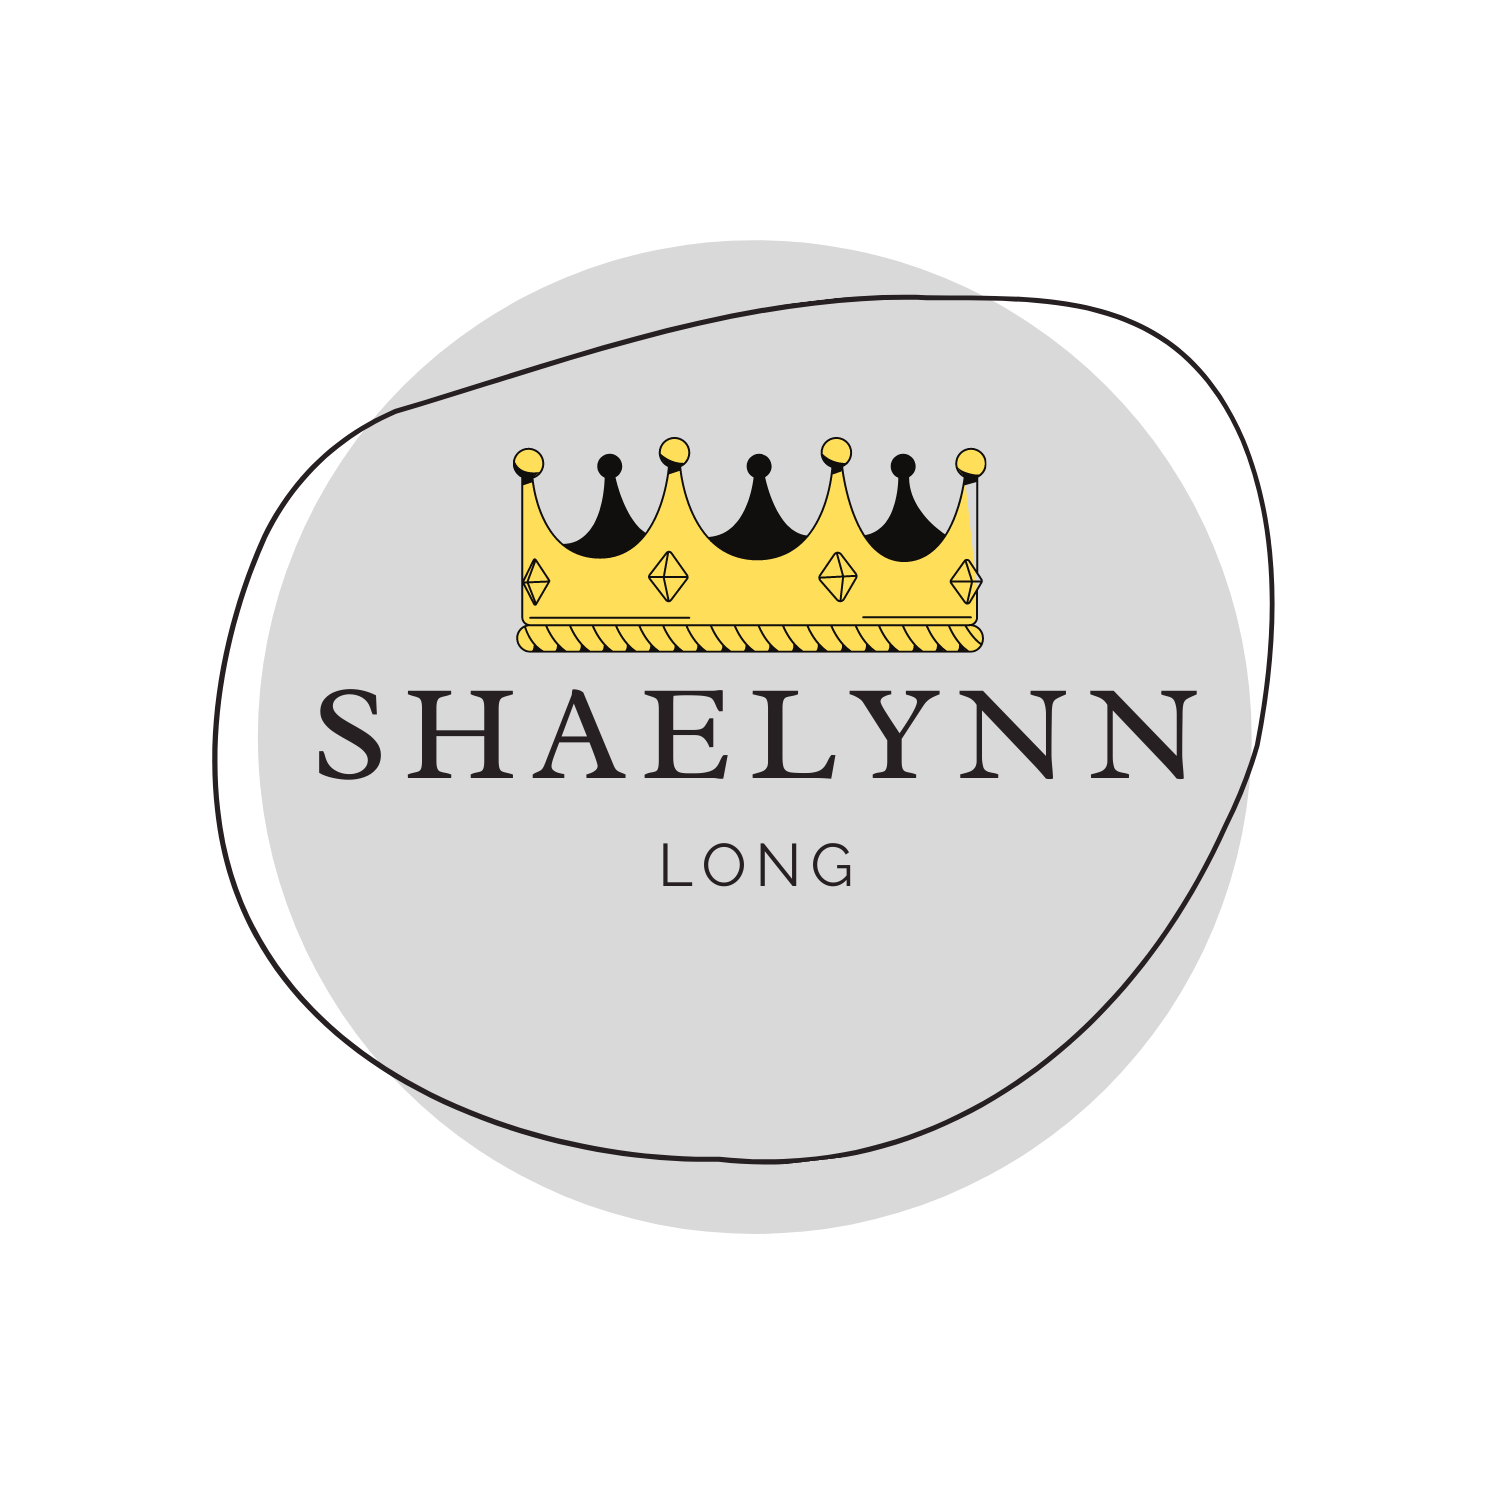 Shaelynn Long